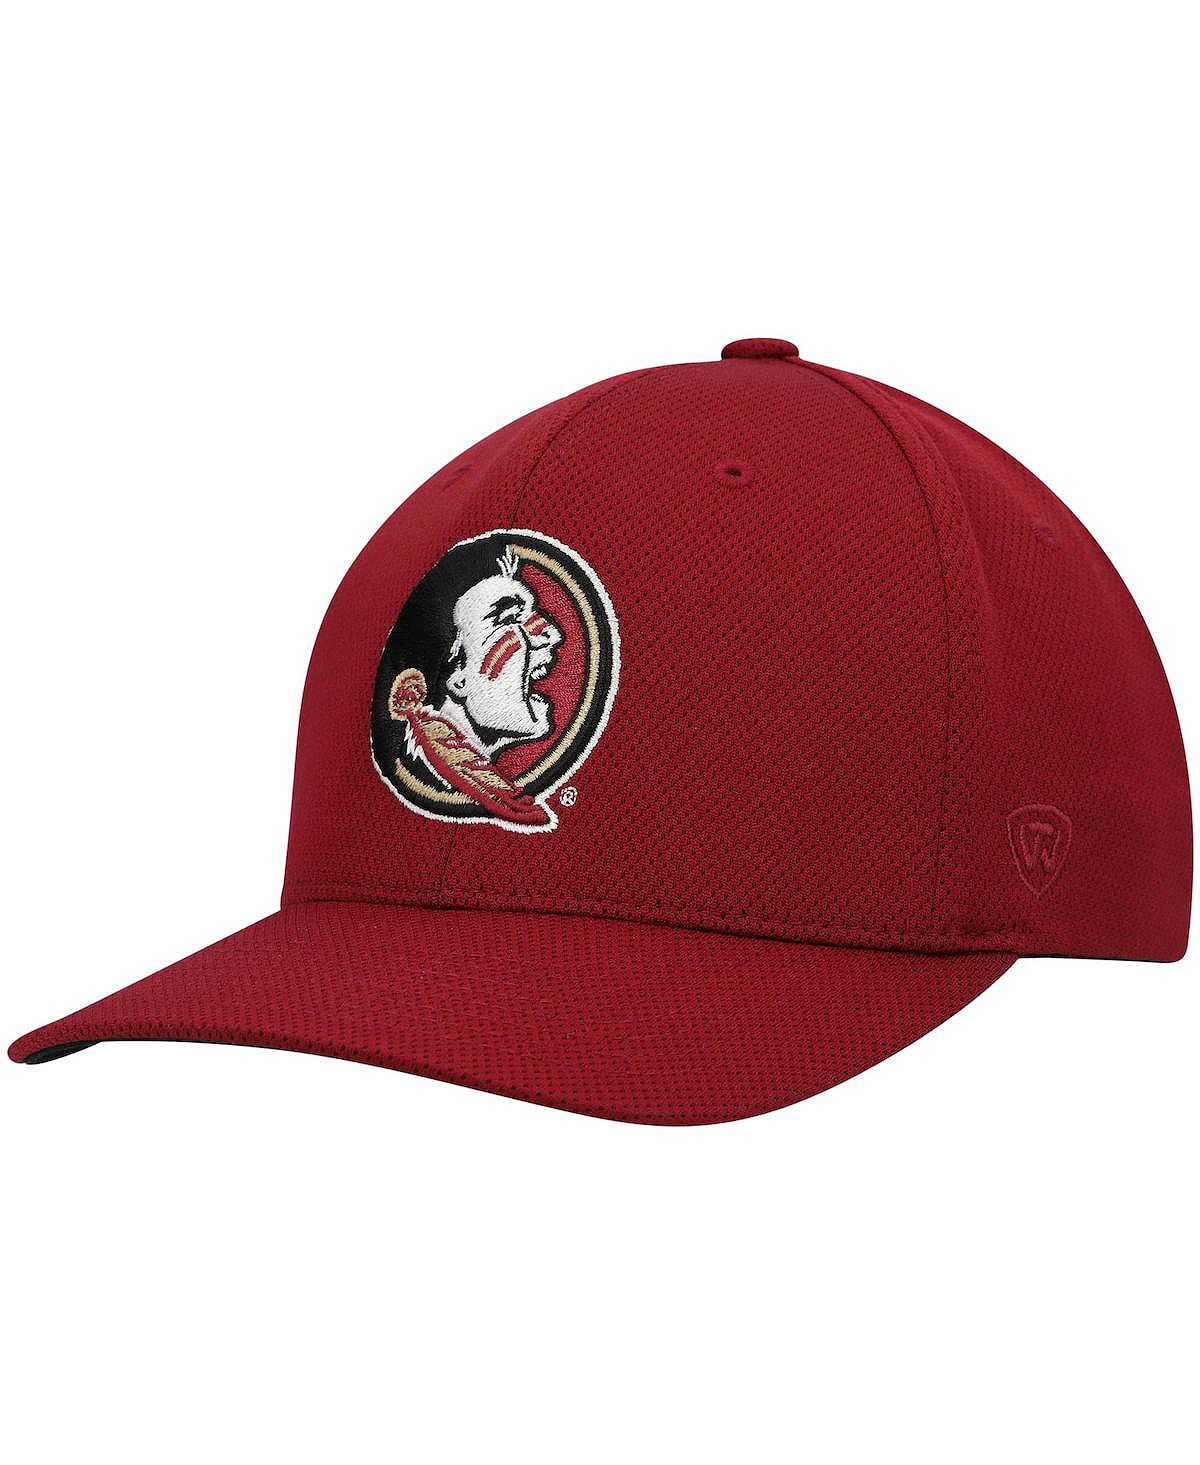 Мужская шапка с гранатом и гибким логотипом штата Флорида Seminoles Reflex Top of the World